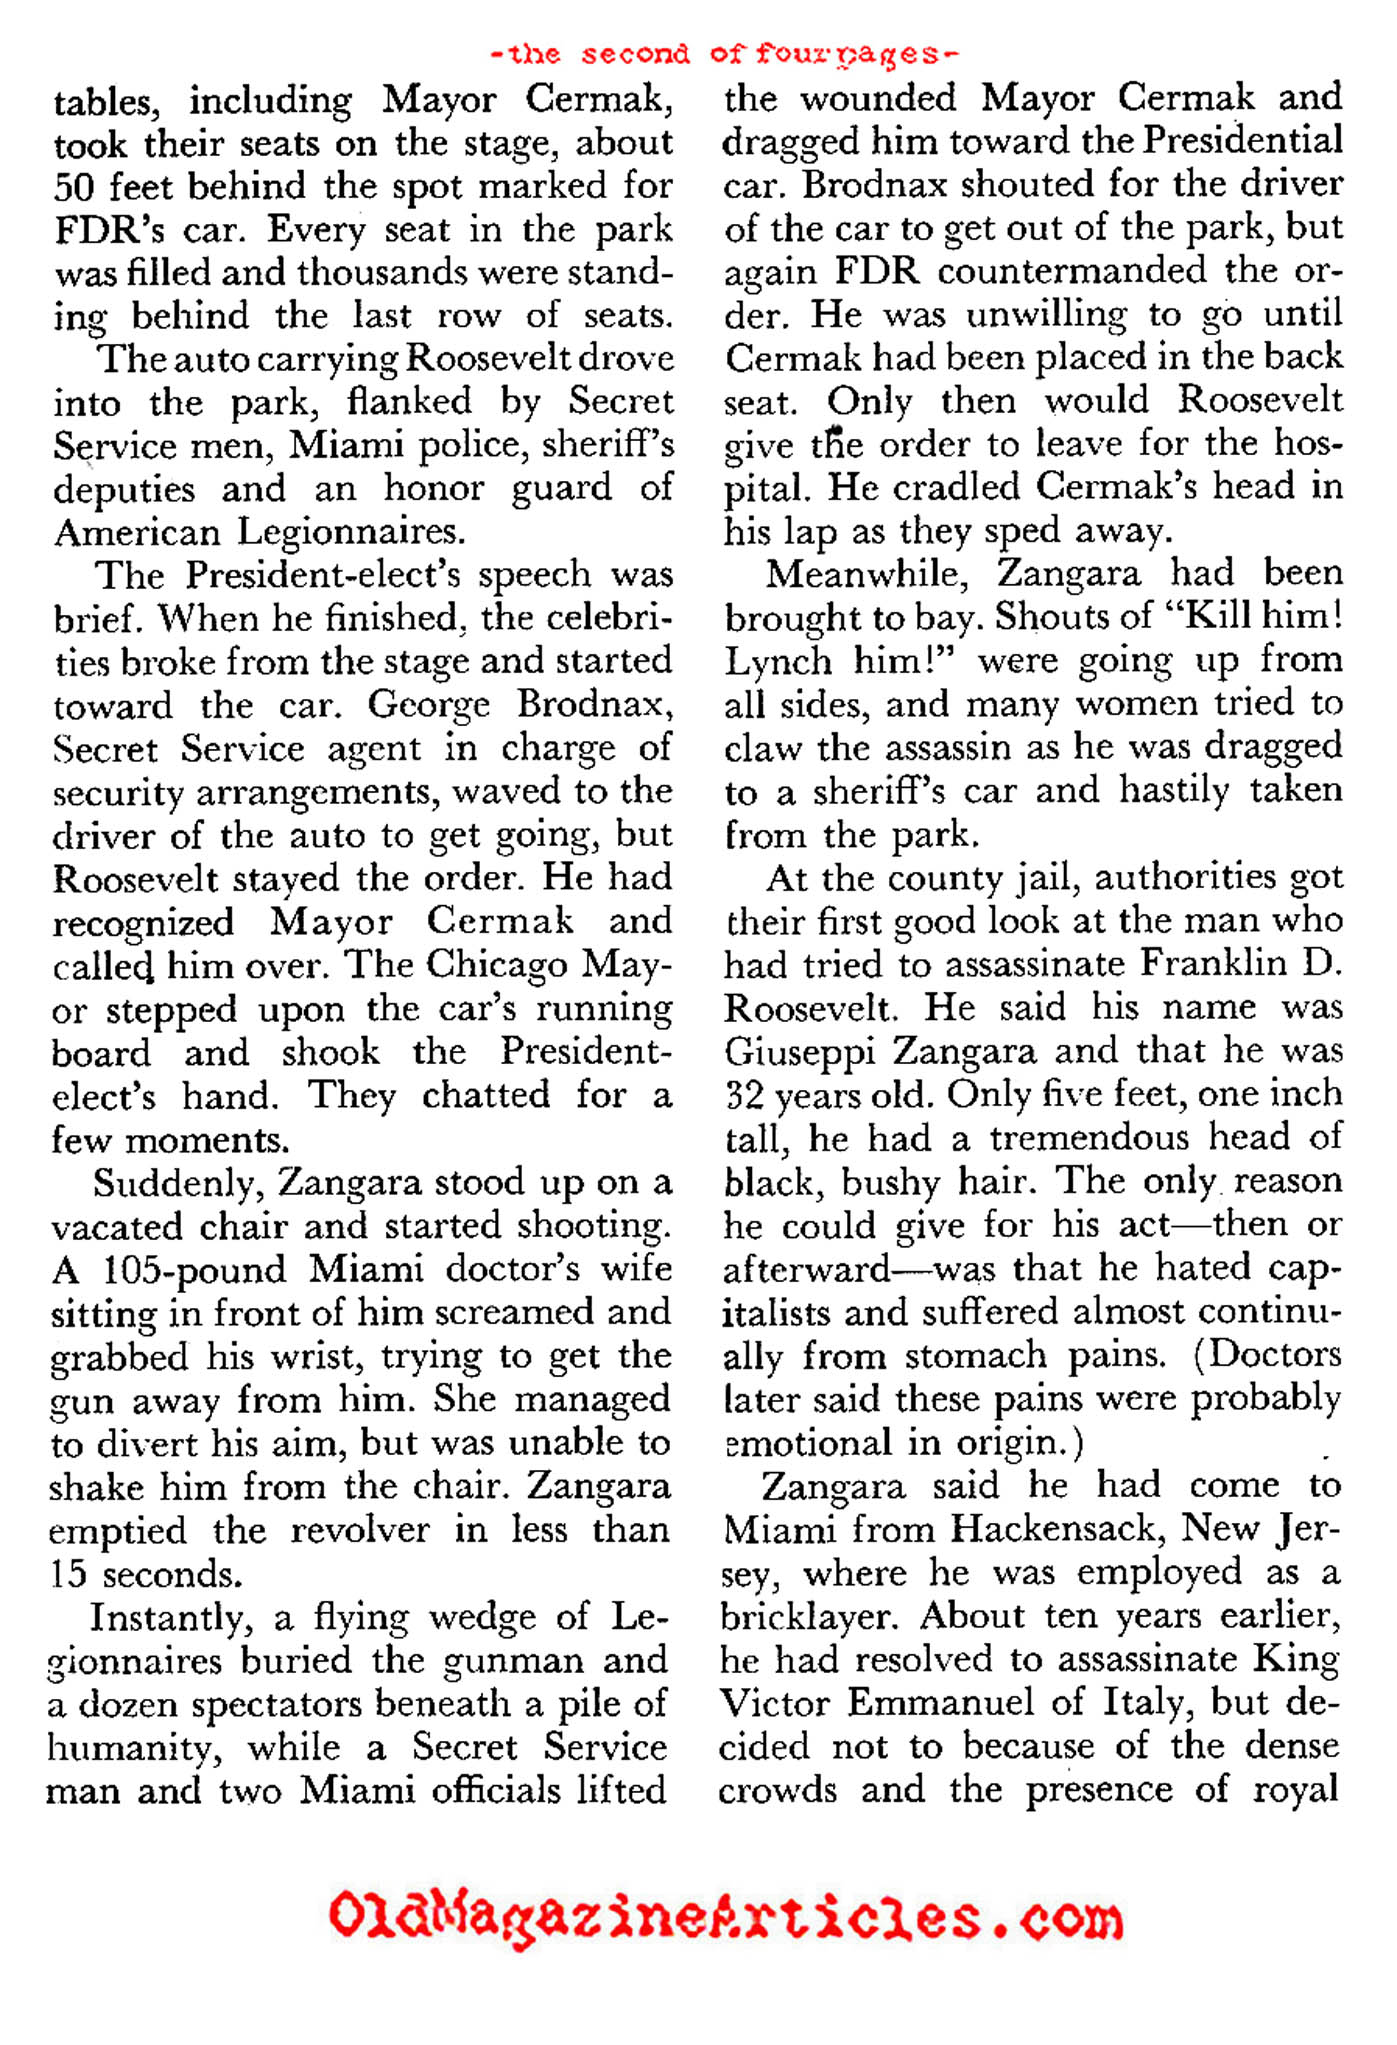 The FDR Assassination Attempt (Coronet Magazine, 1960)